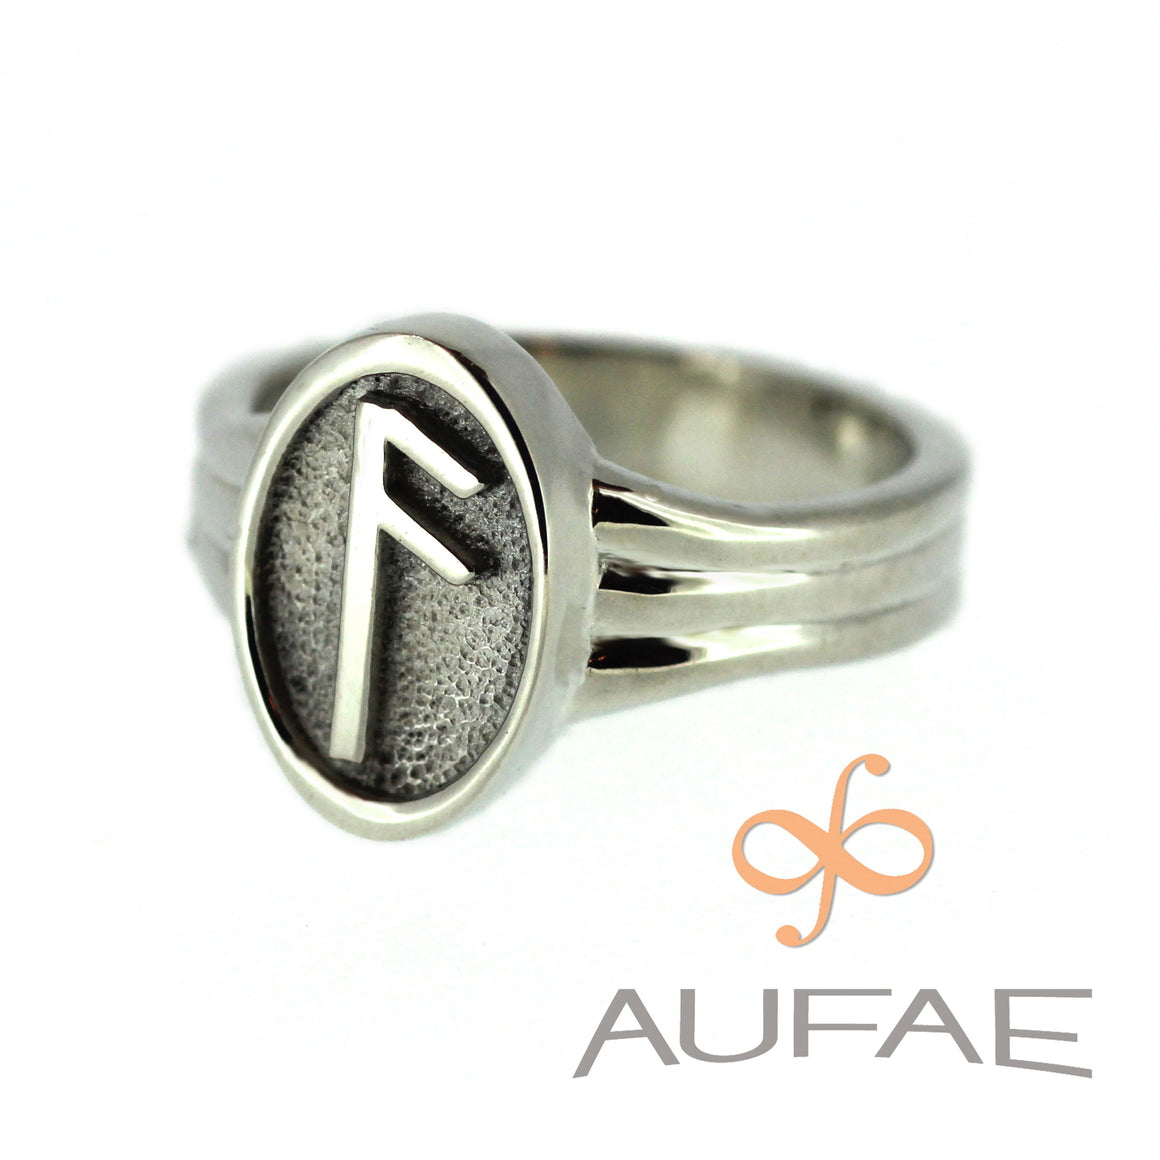 Aufae Ansuz Rune Ring in Sterling Silver